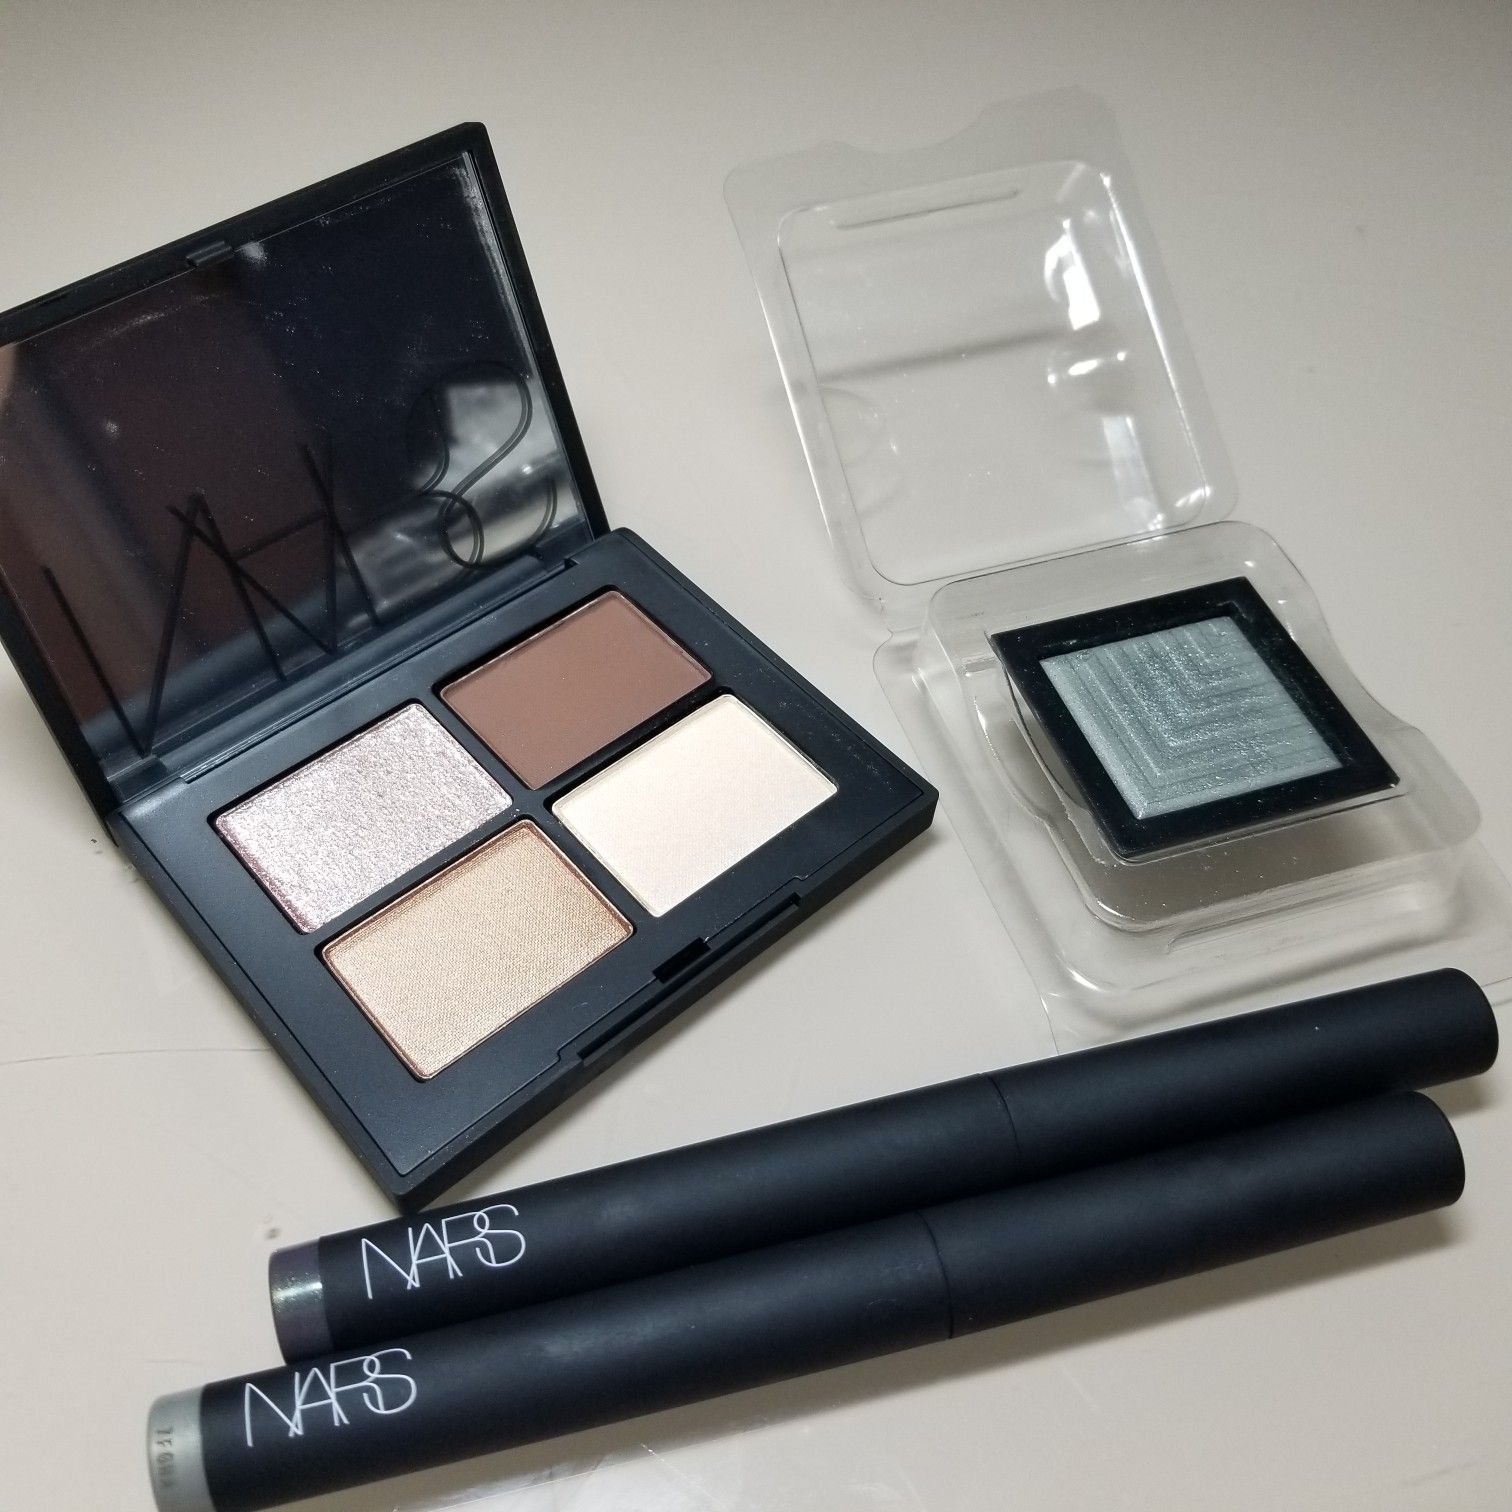 NARS/Lancome cosmetics, lot of 7